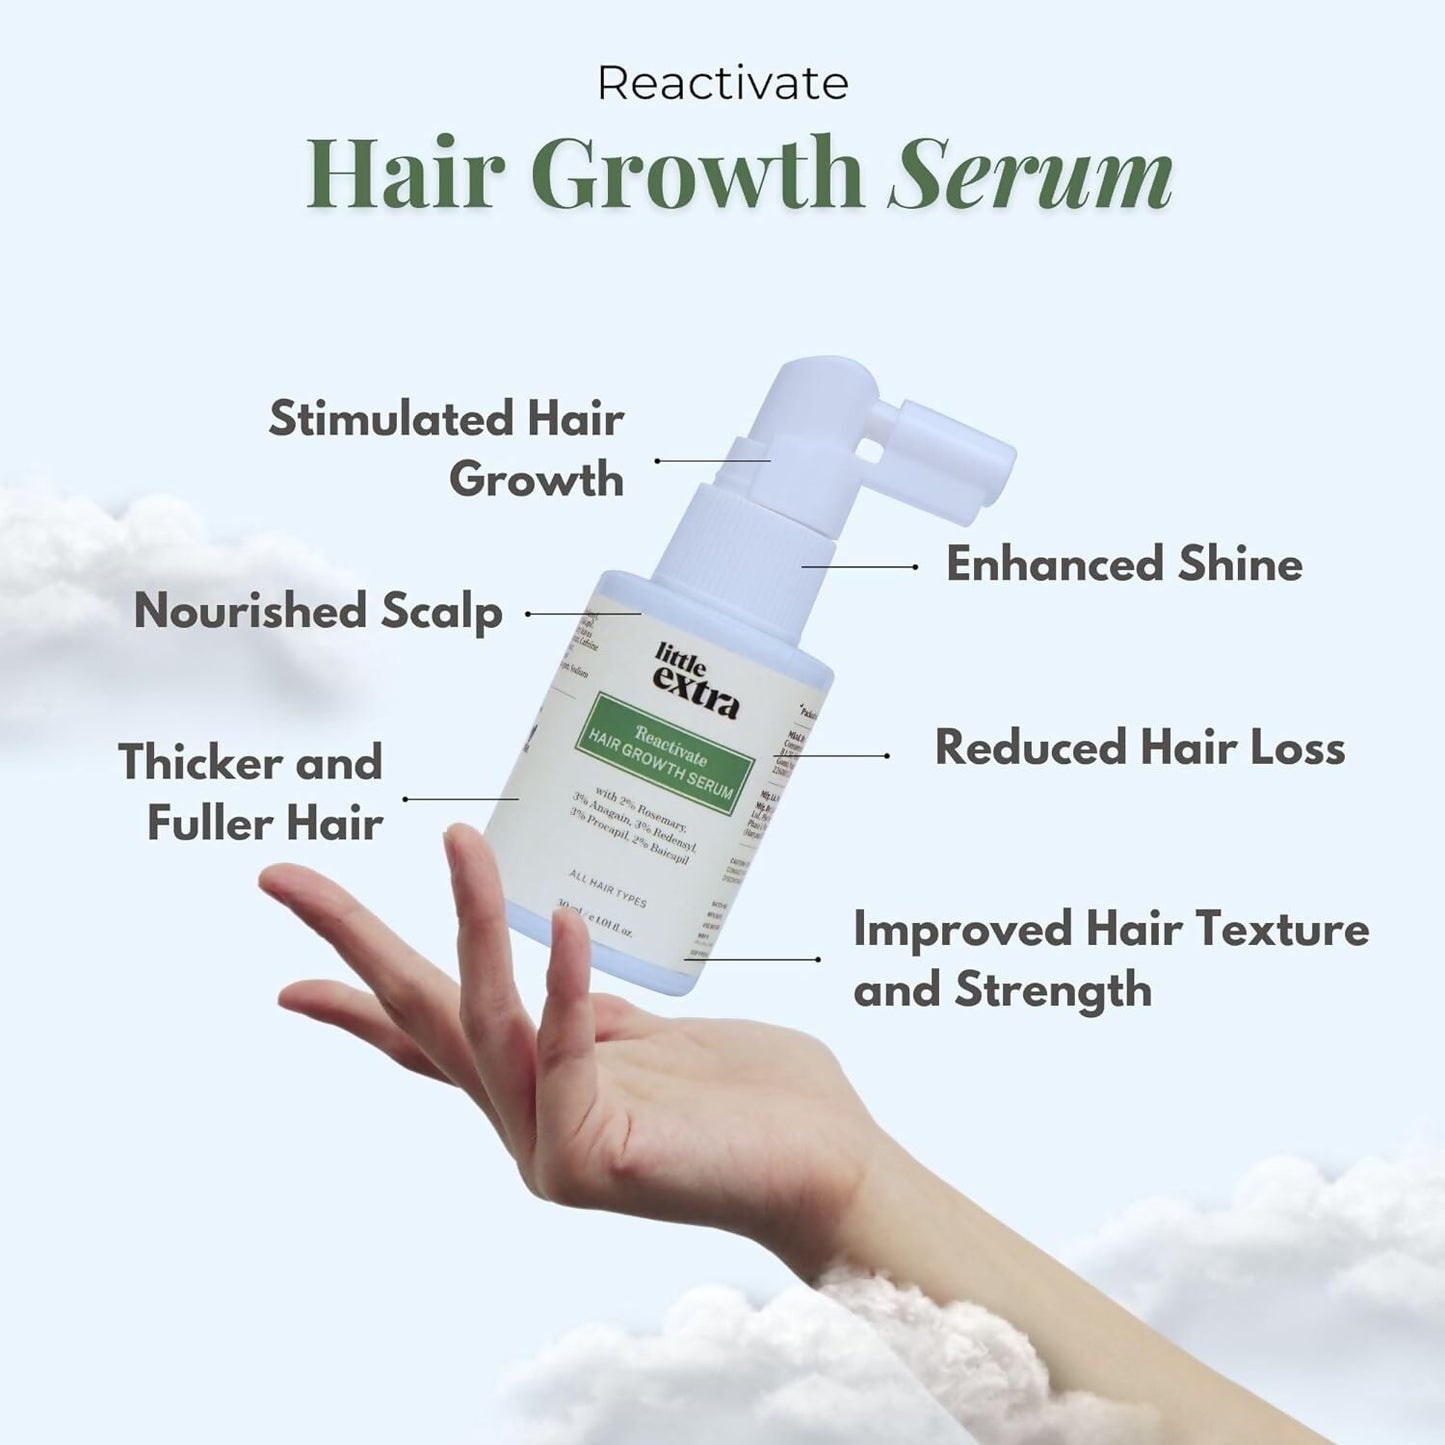 Little Extra Reactivate Hair Growth Serum